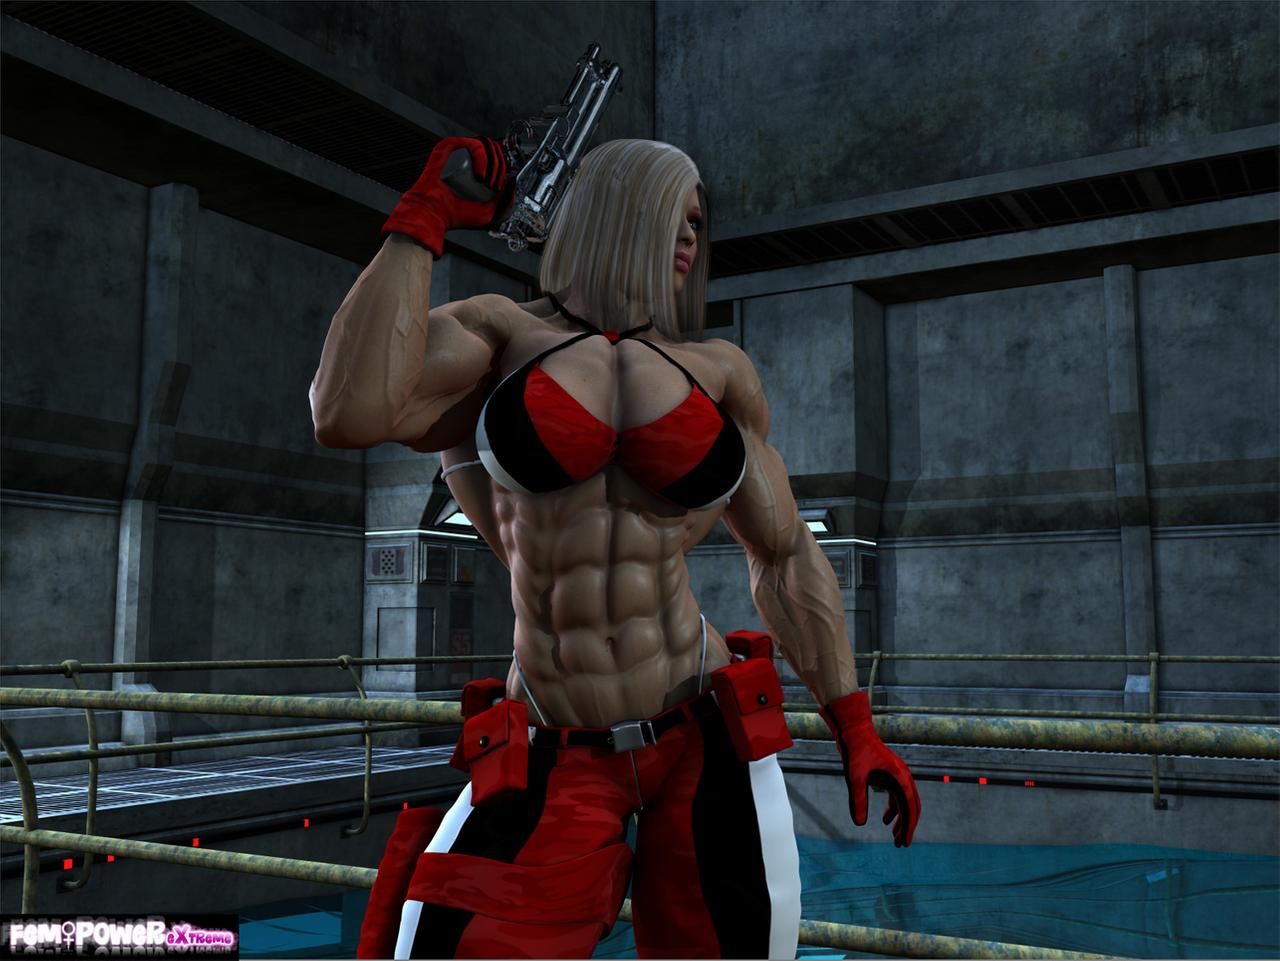 Muscle girls 3D models_ part 2 by Tigersan 119